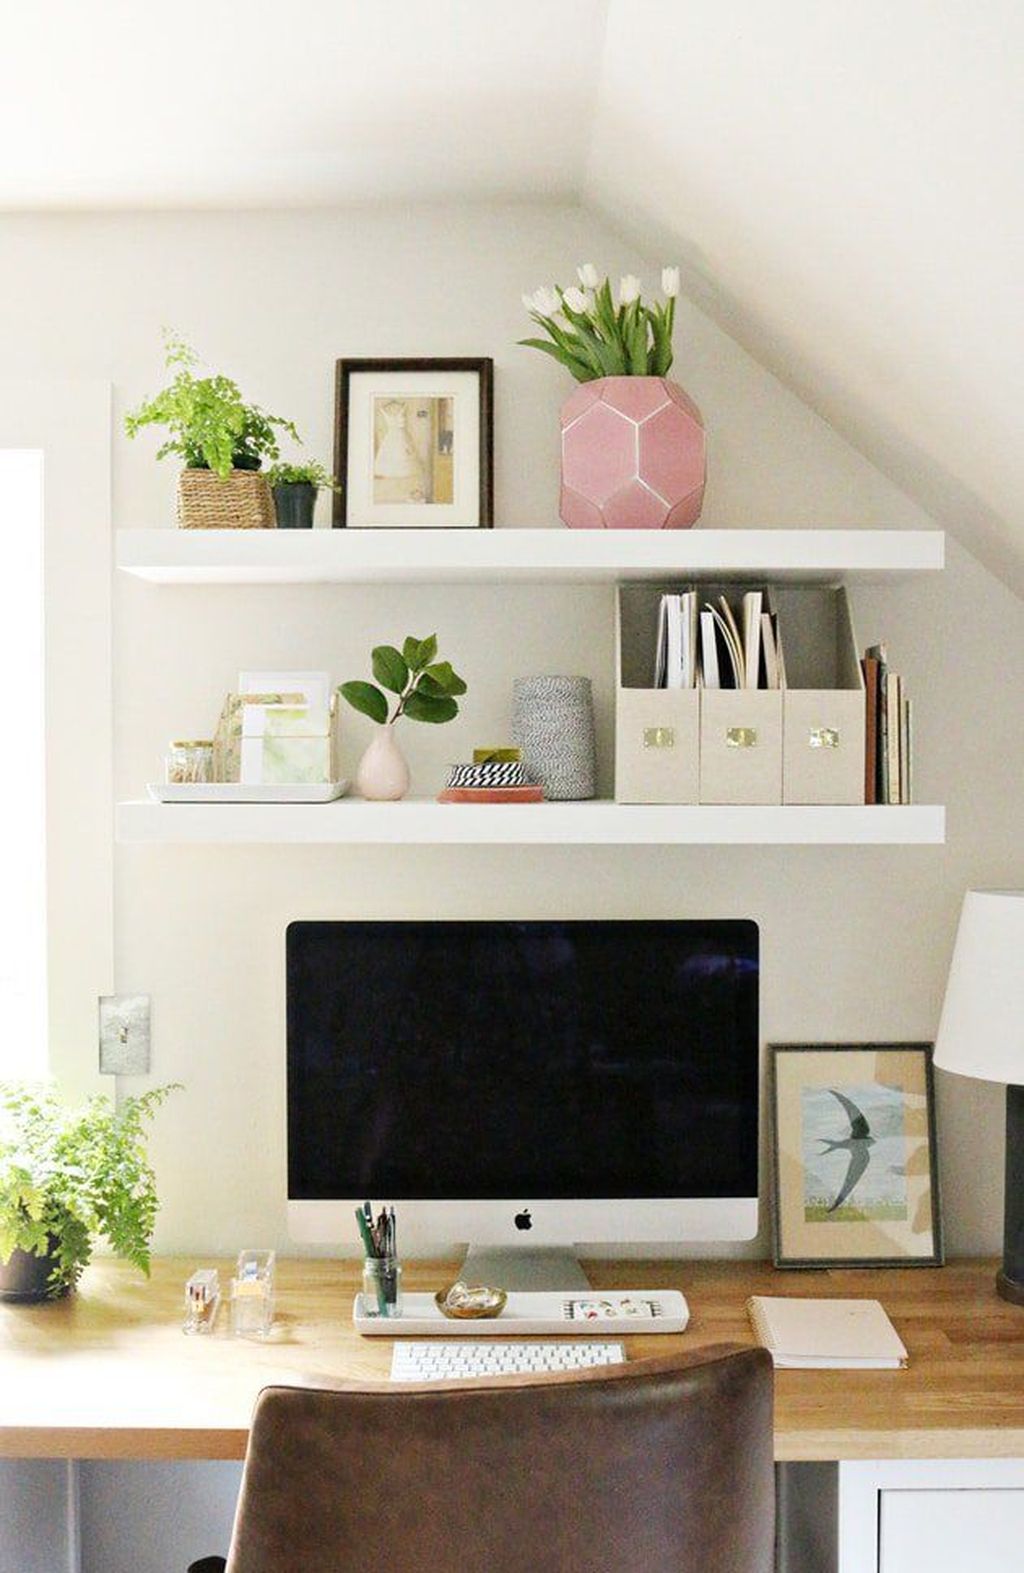 32 Nice Small Home Office Design Ideas - PIMPHOMEE